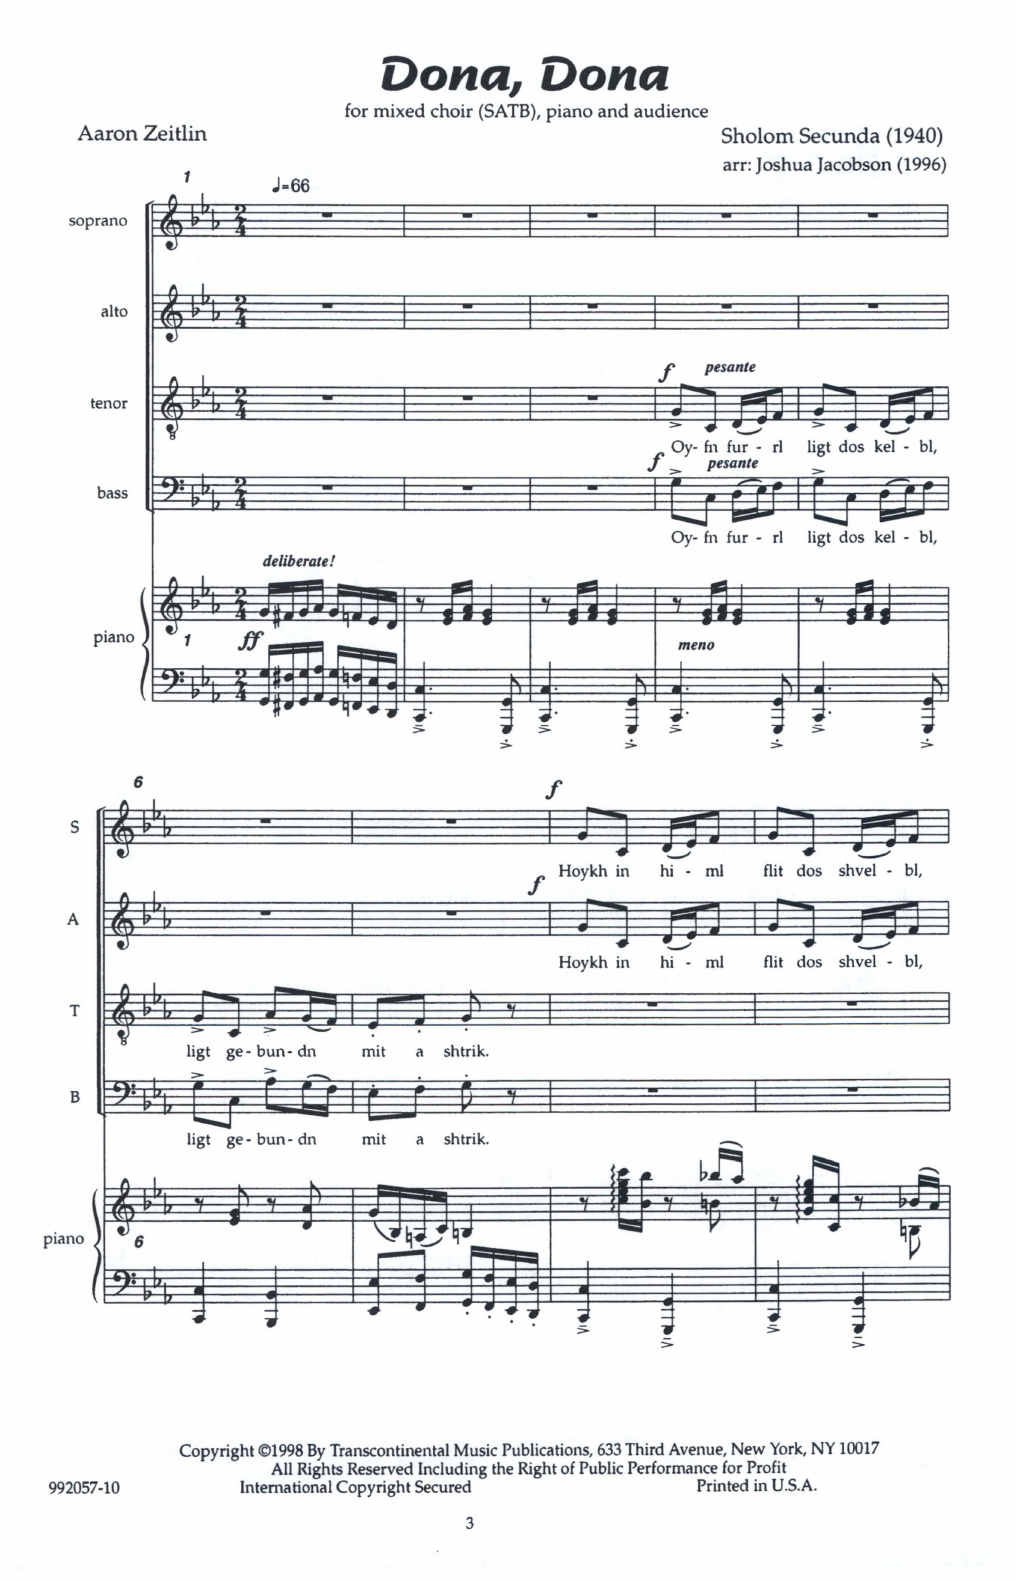 Sholom Secunda Dona, Dona (arr. Joshua Jacobson) Sheet Music Notes & Chords for SATB Choir - Download or Print PDF